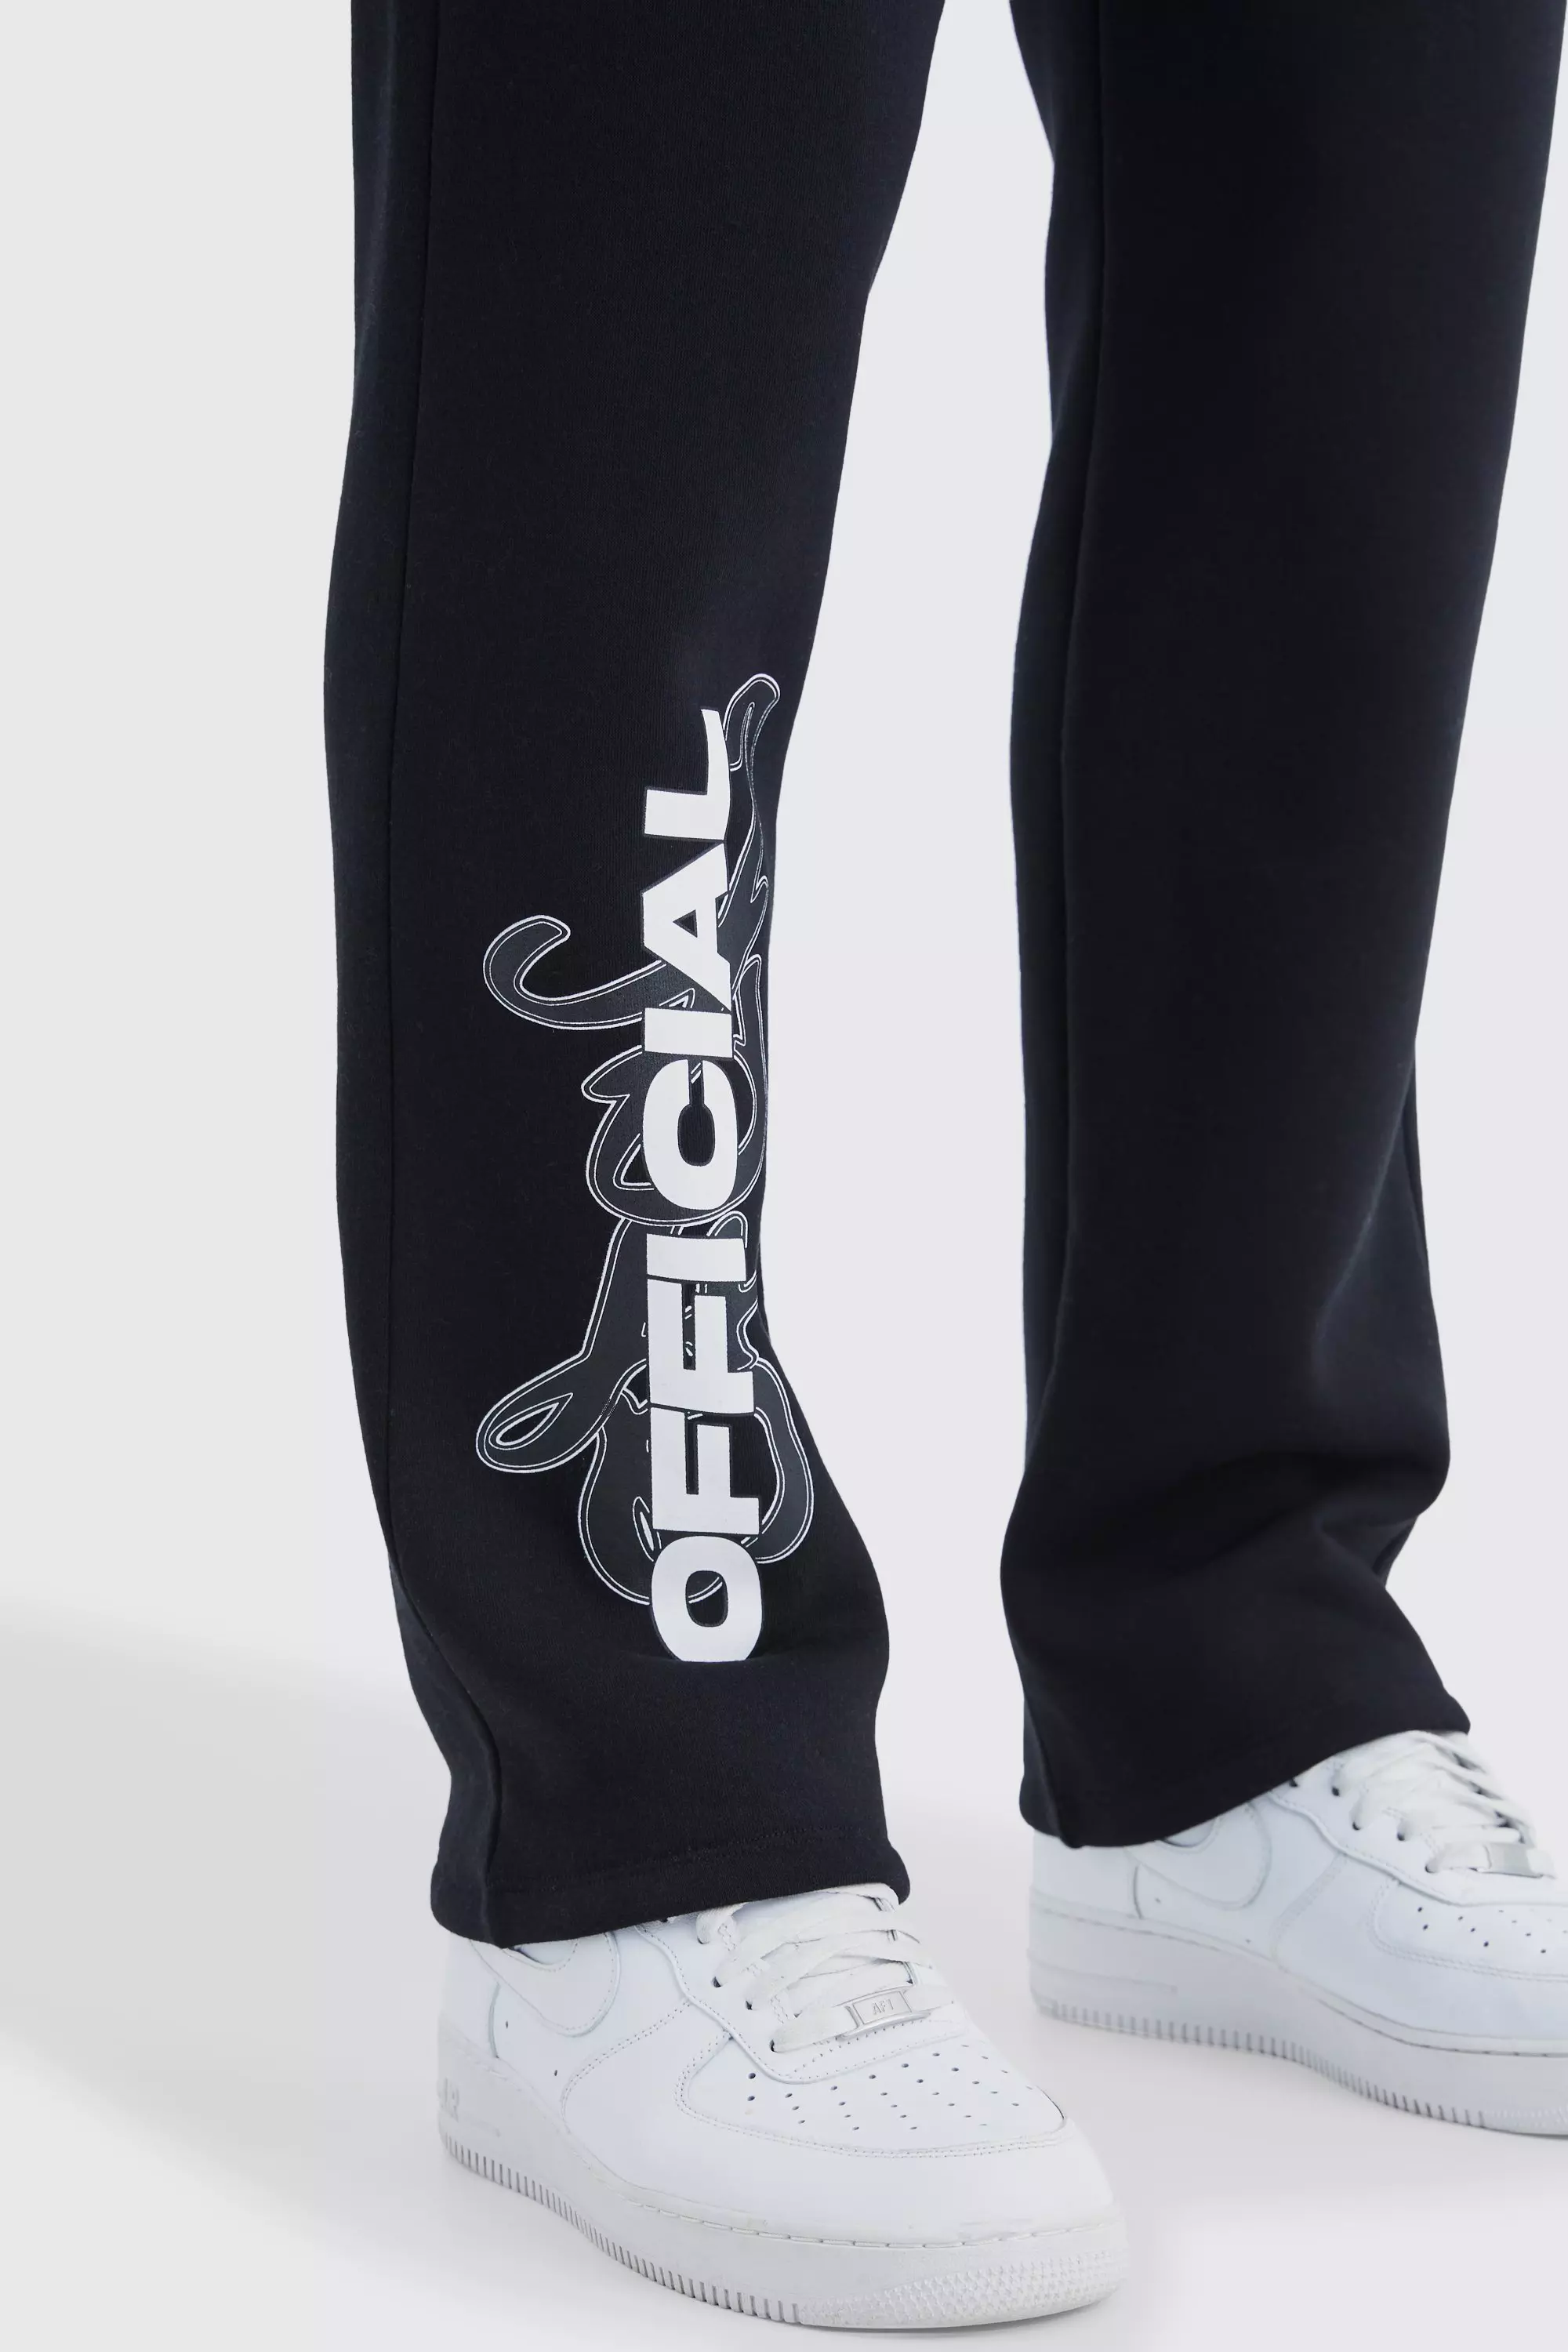 adidas Originals relaxed sweatpants in black